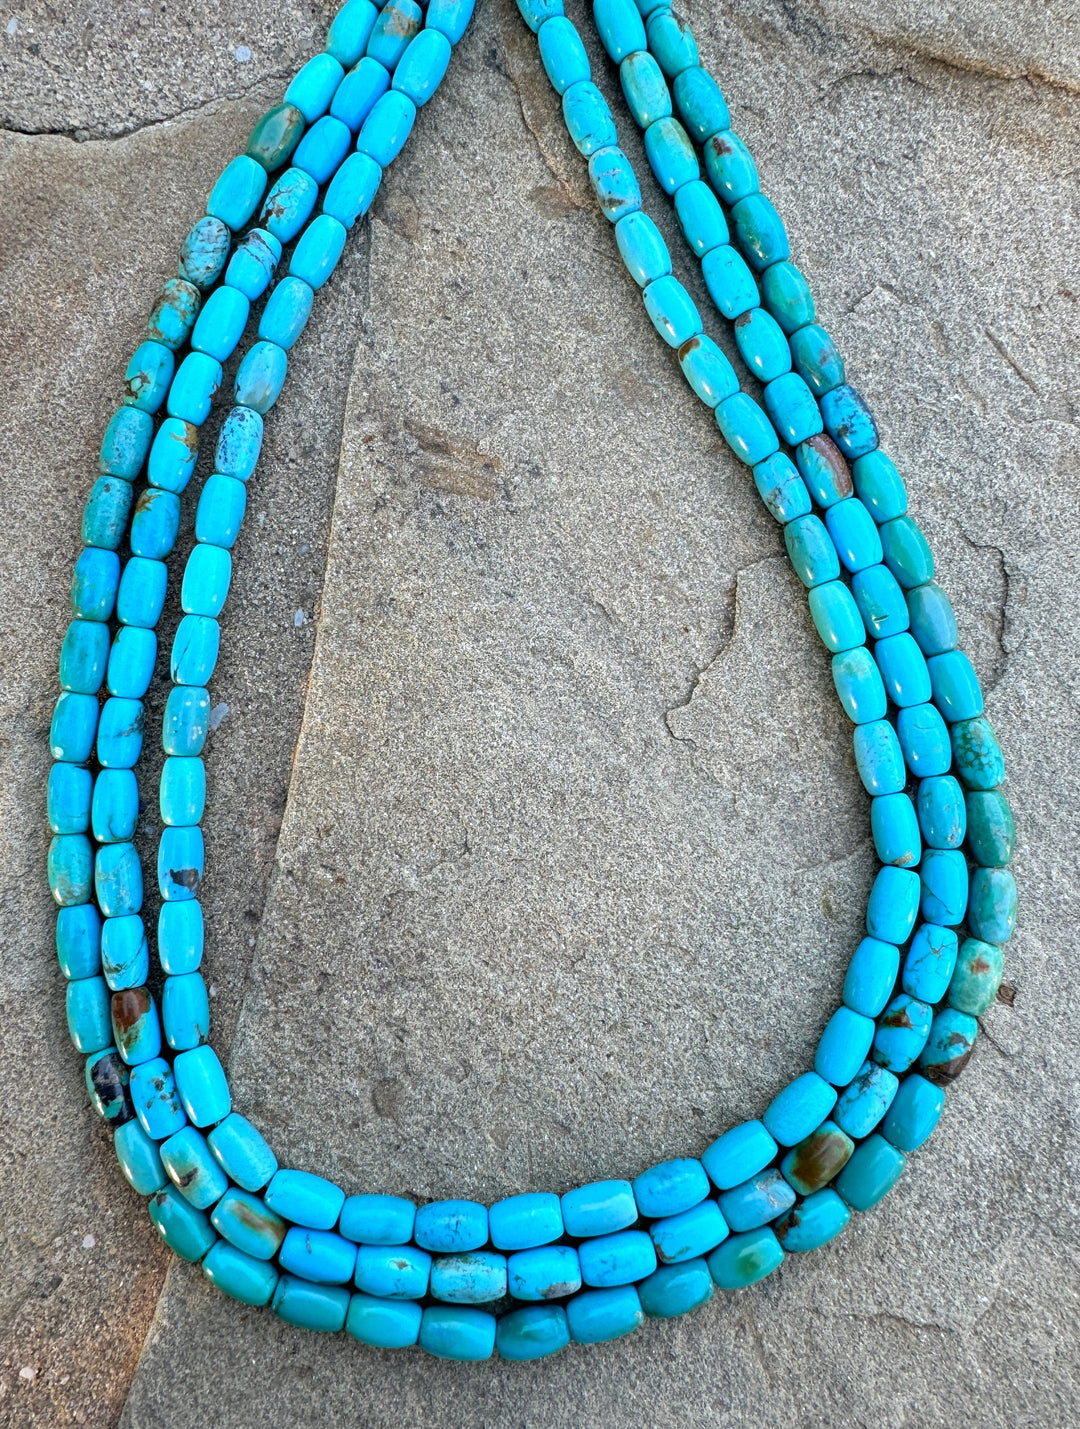 Hubei Turquoise (China) 5x8mm Barrel beads 16 inch strand